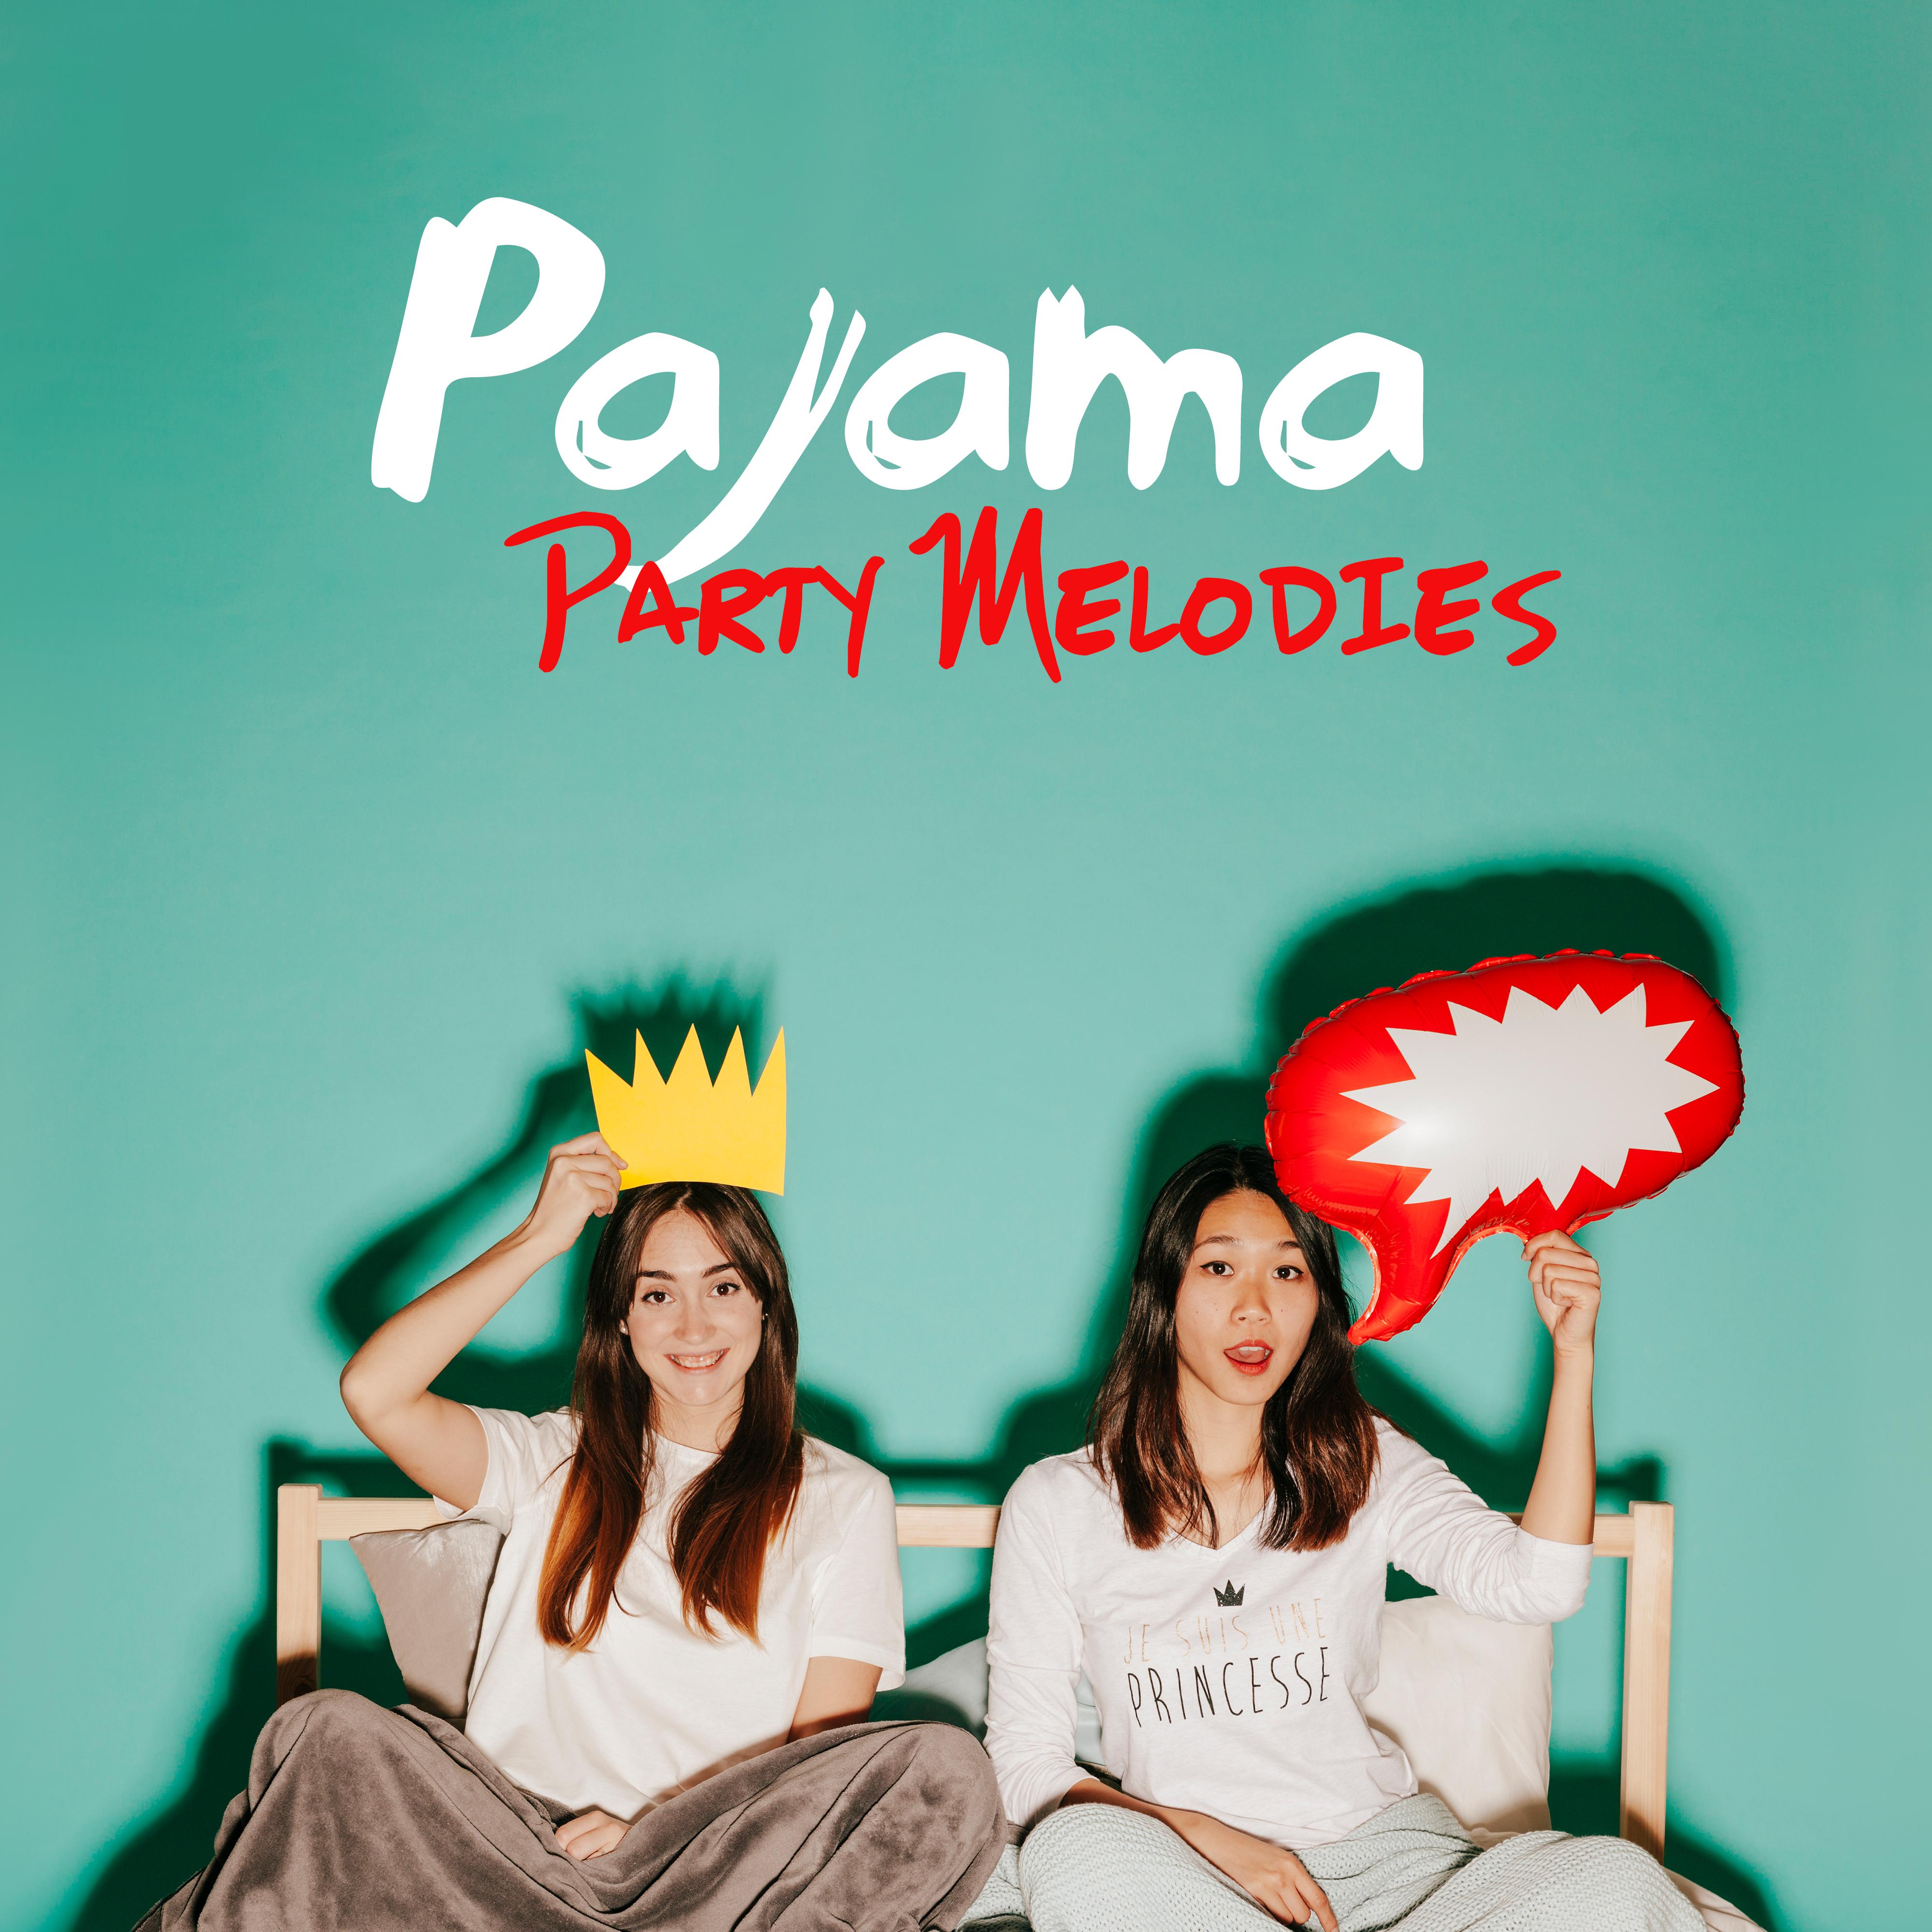 Pajamas Party Melodies